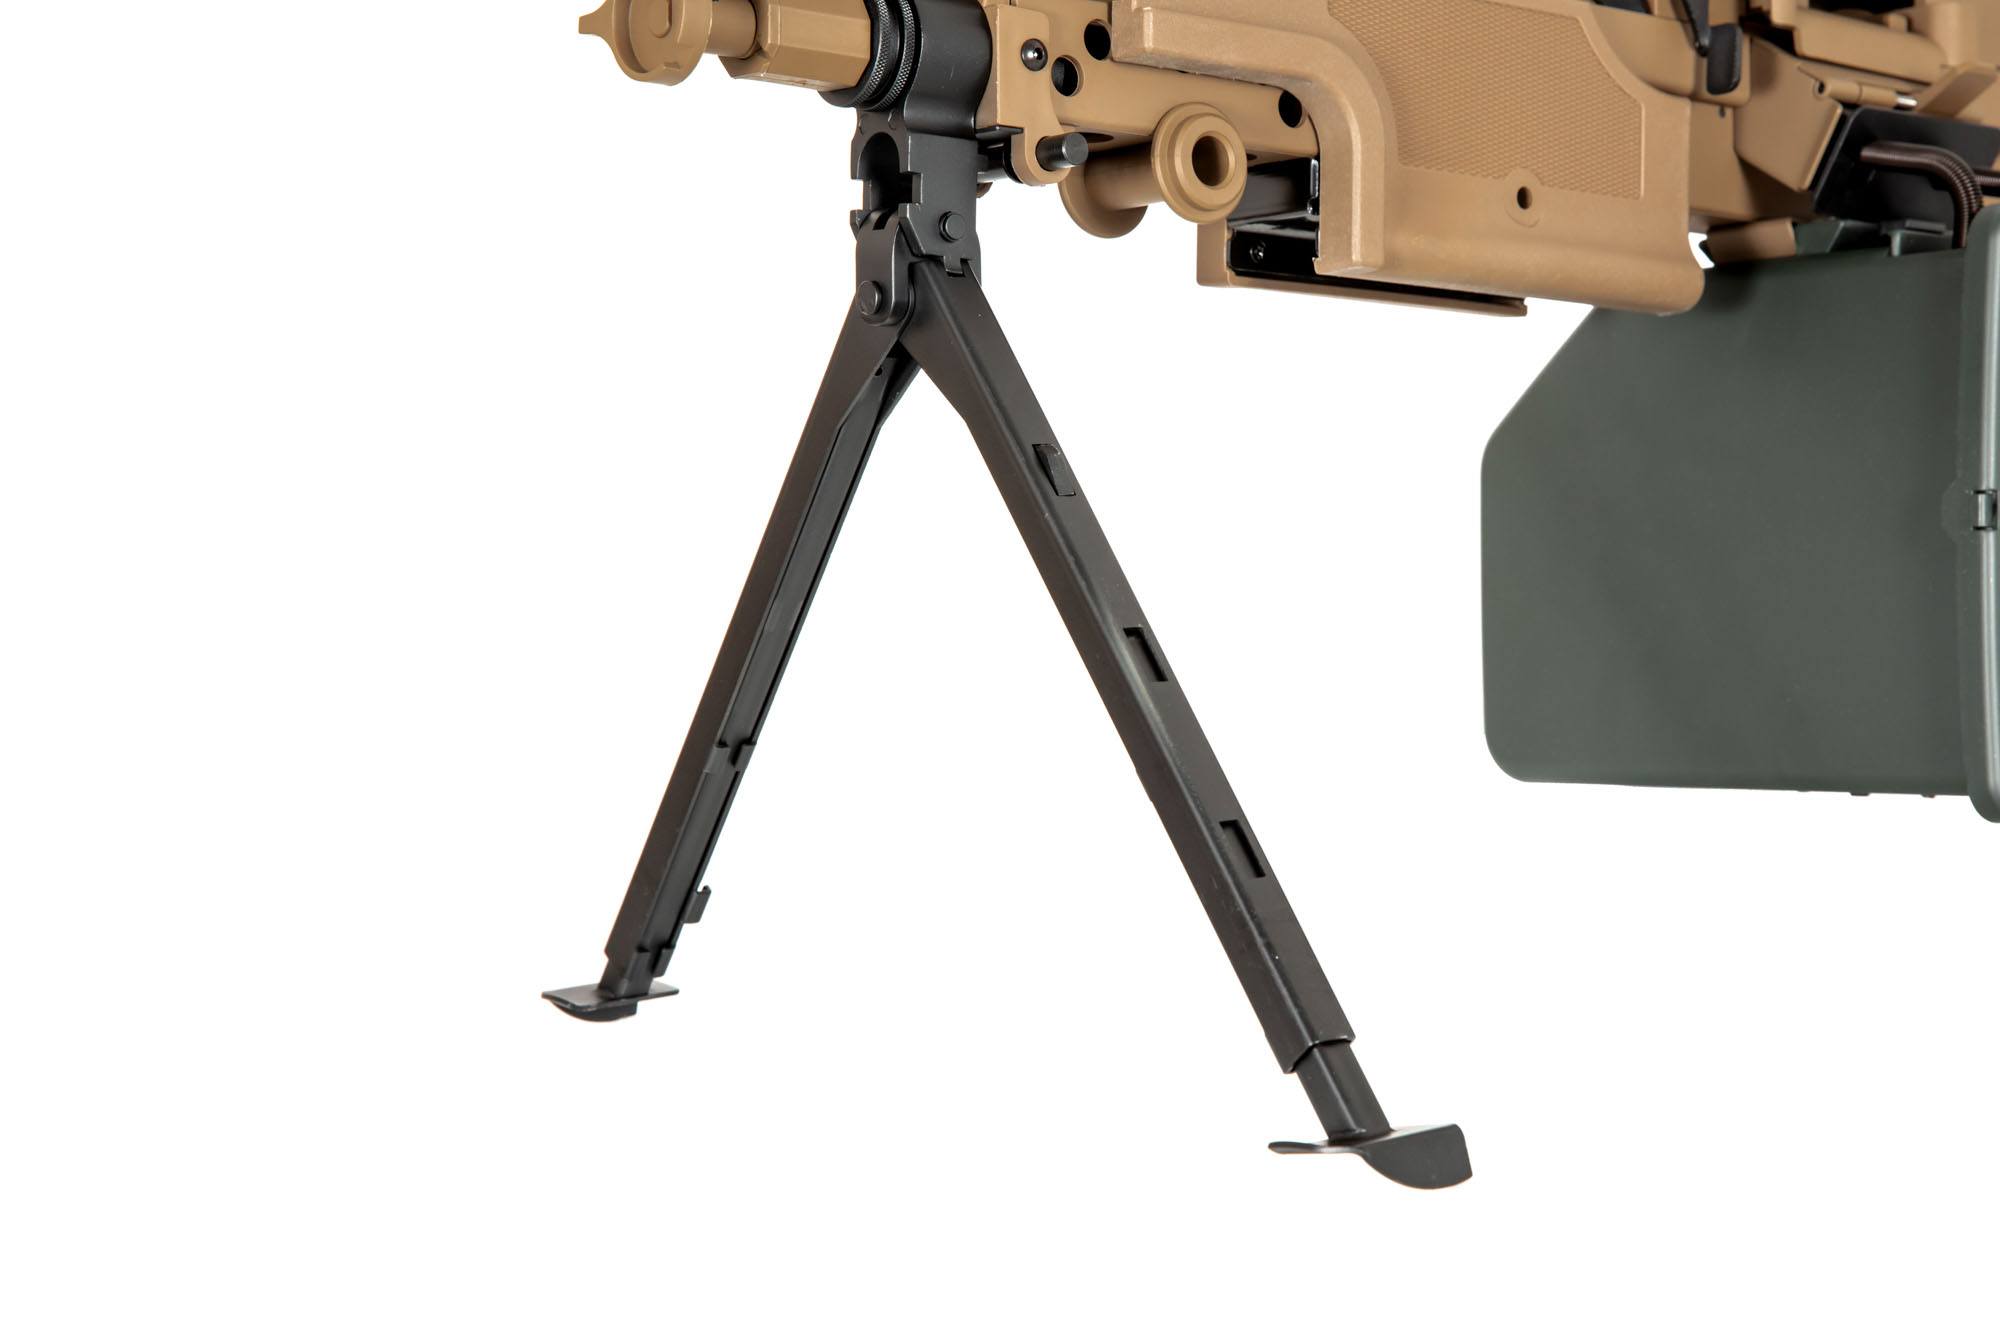 SA-249 MK1 CORE ™ Machine Gun Replica - Tan by Specna Arms on Airsoft Mania Europe